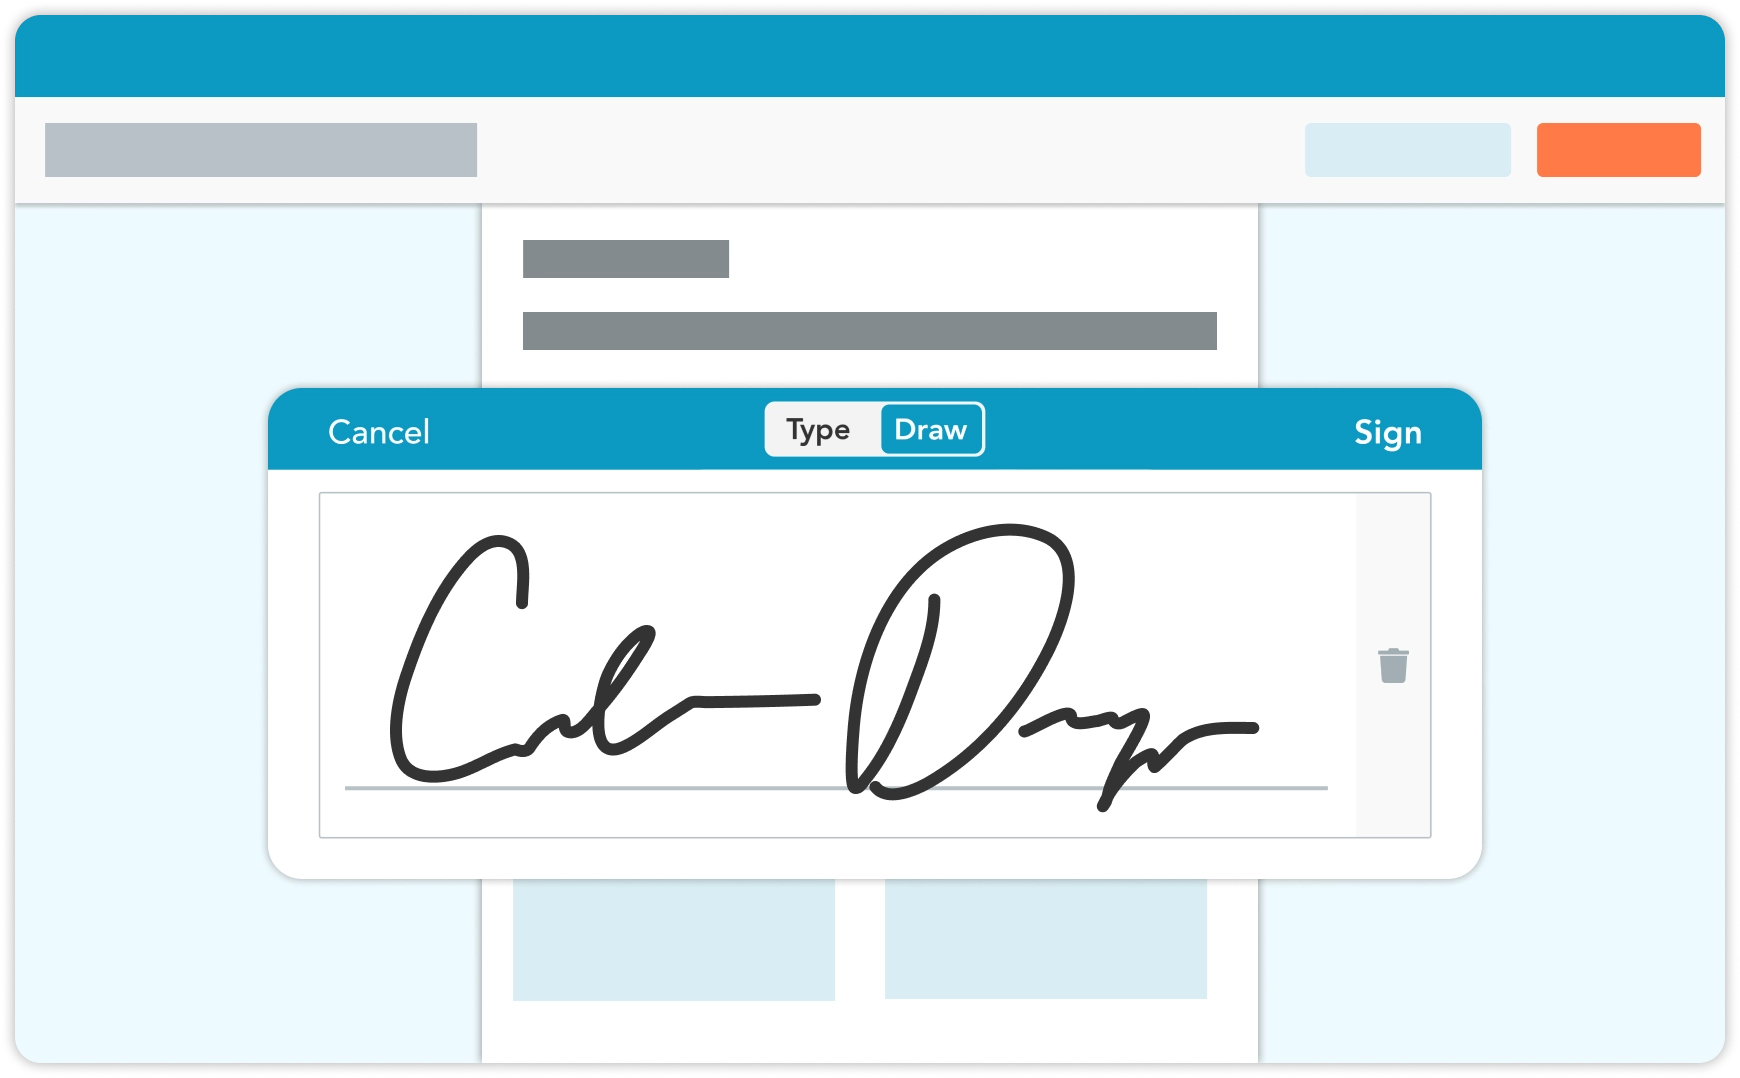 Electronic signatures help maintain digital timesheet compliance